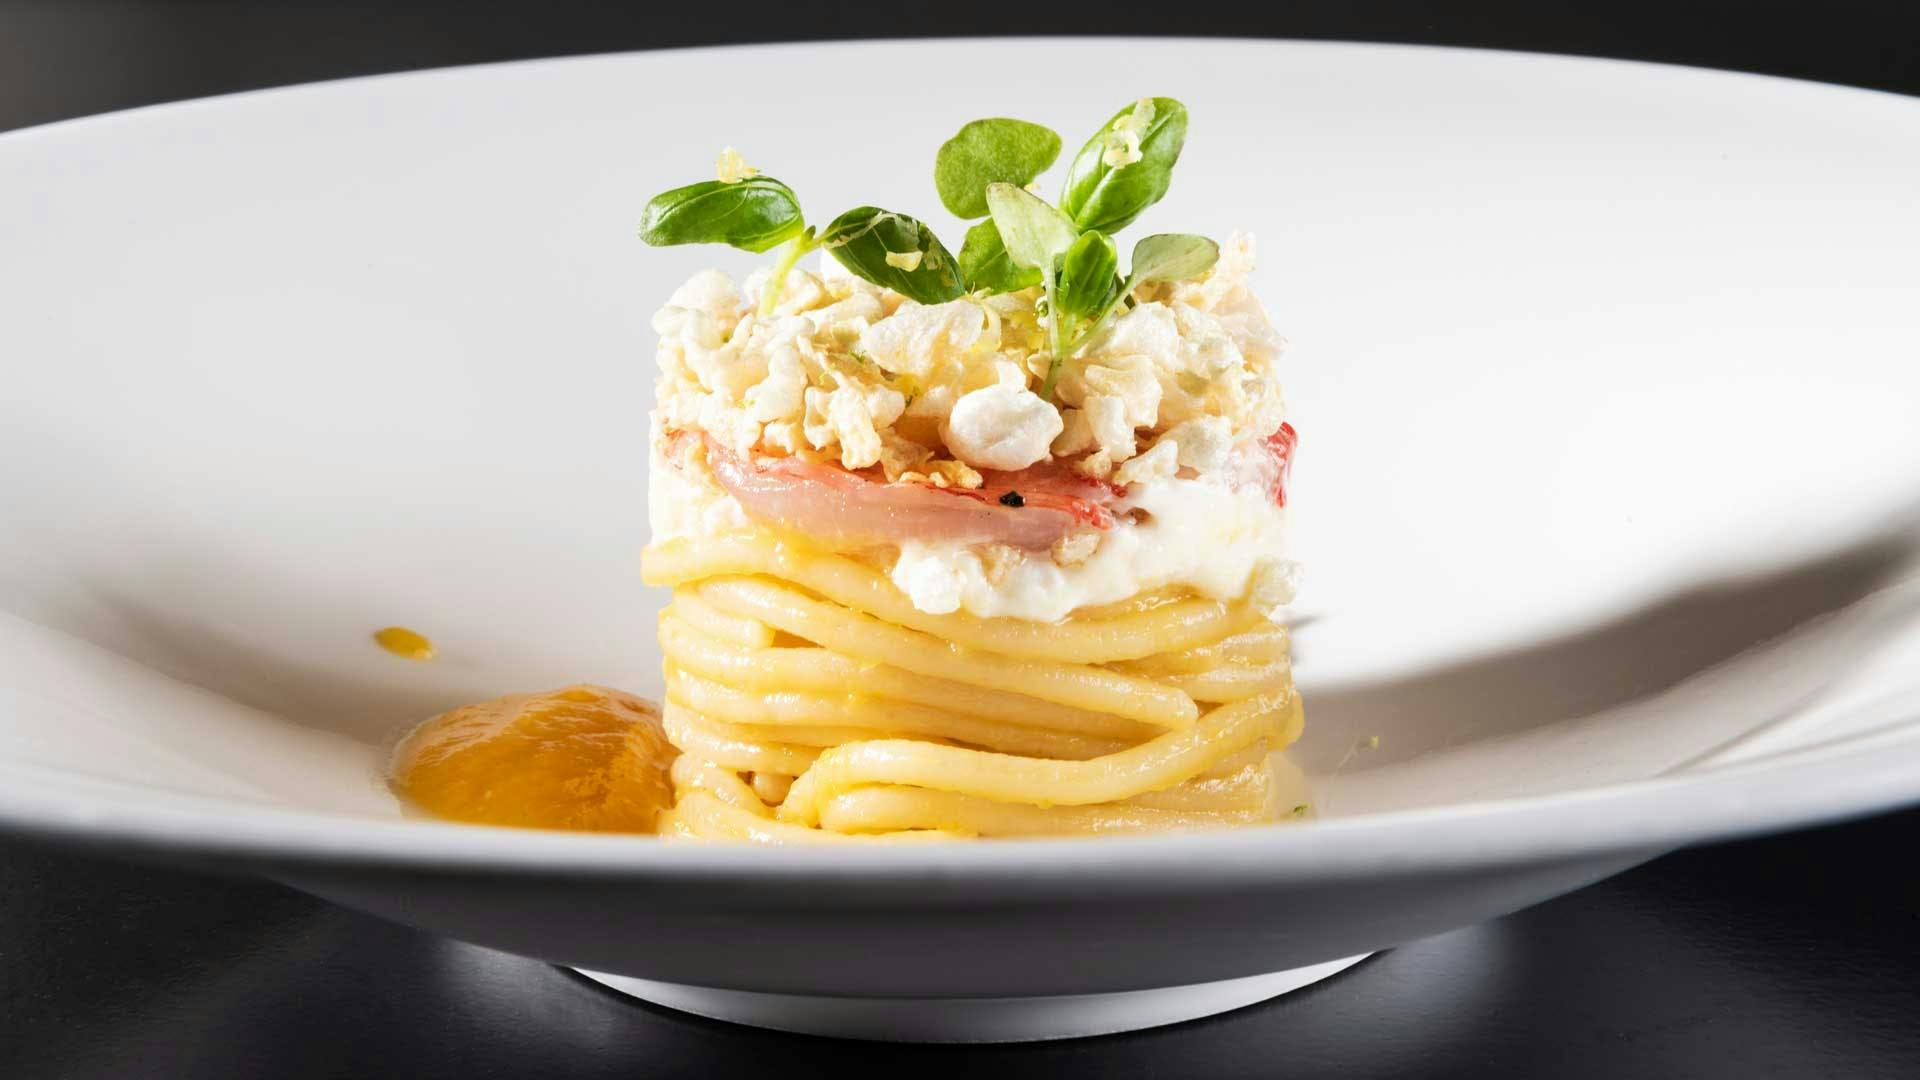 Spaghetto al pomodoro giallo by Cristoforo Trapani